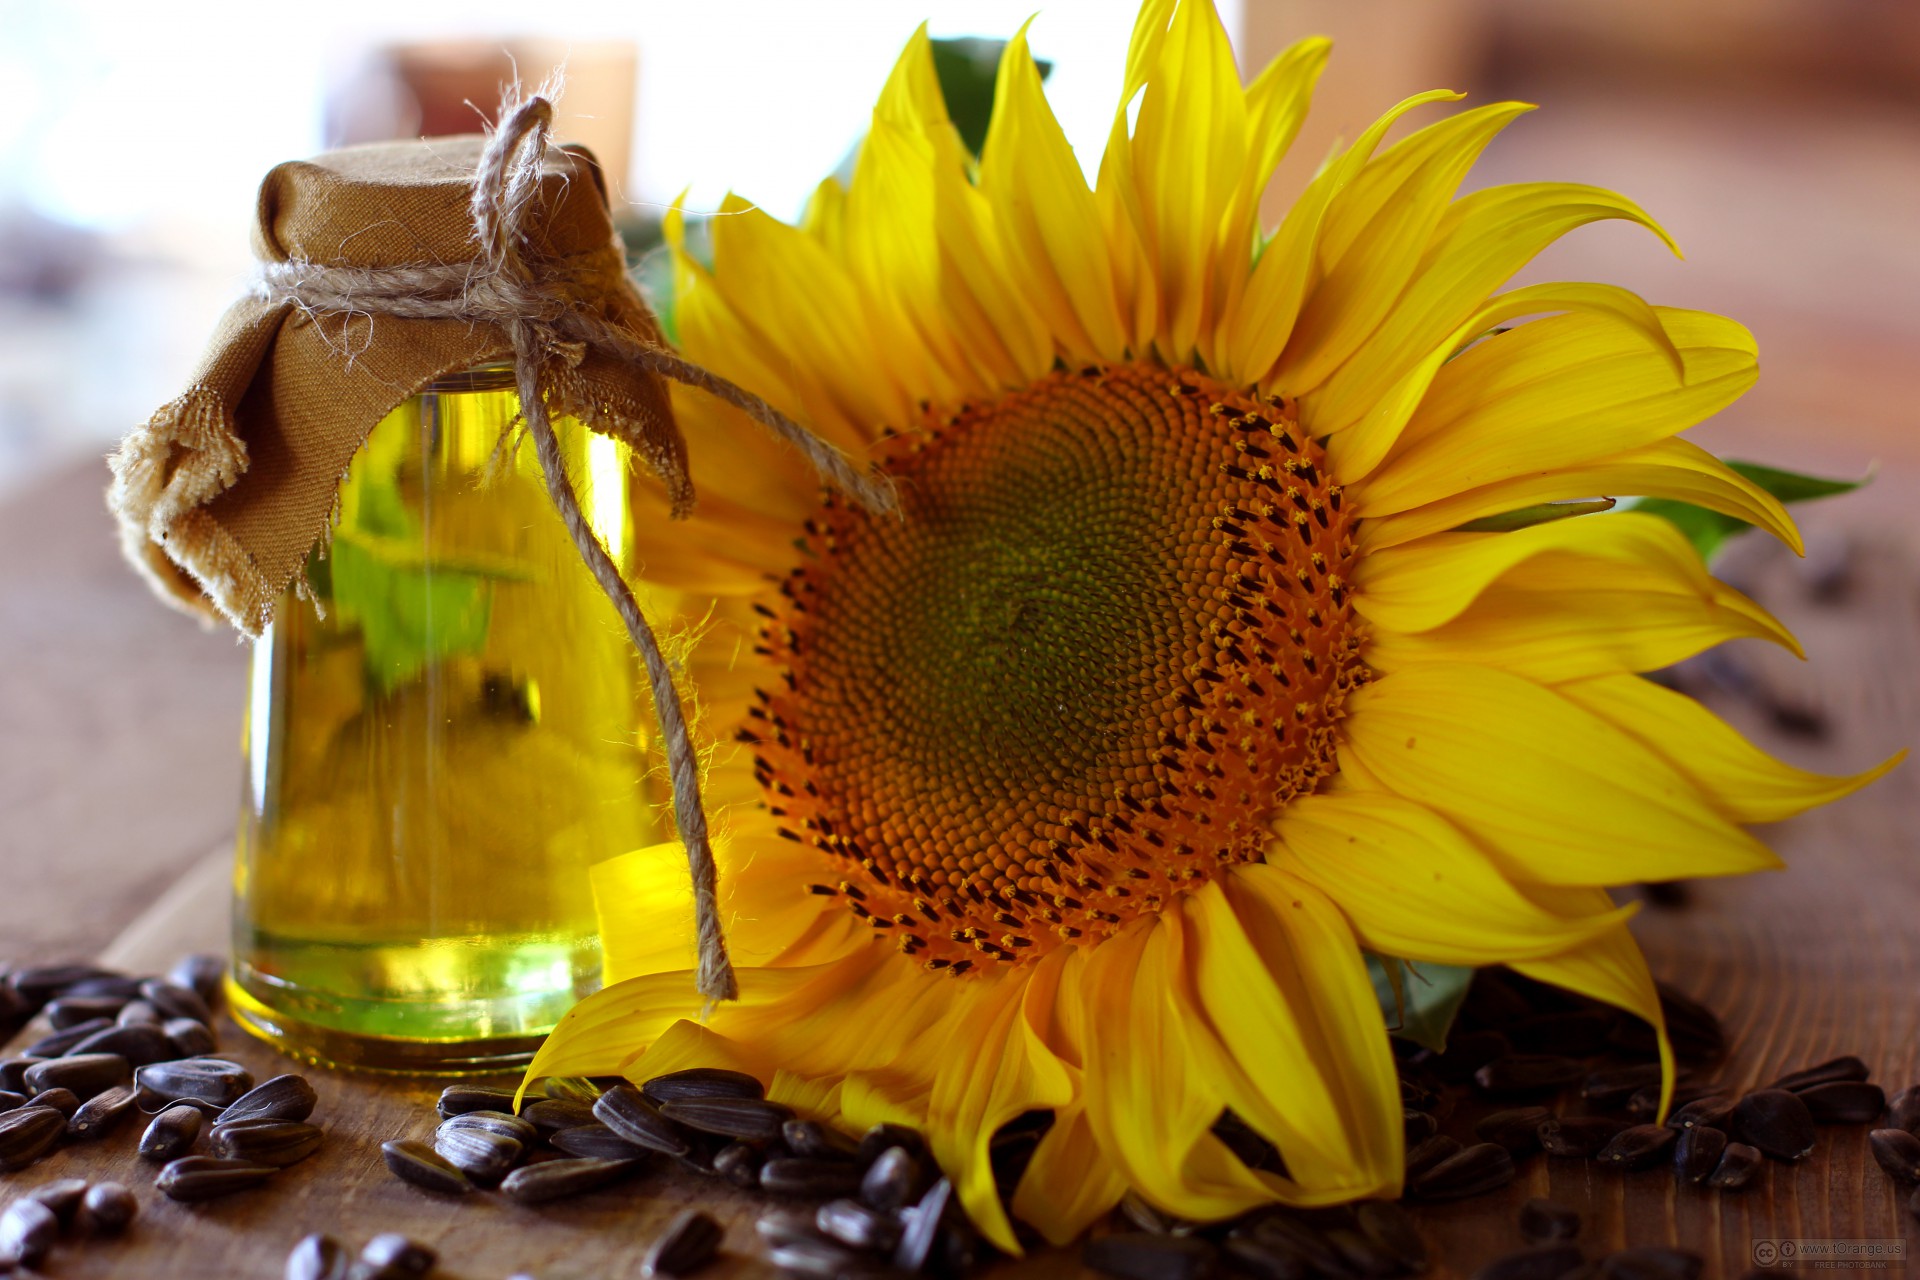 Crude sunflower oil unrefined